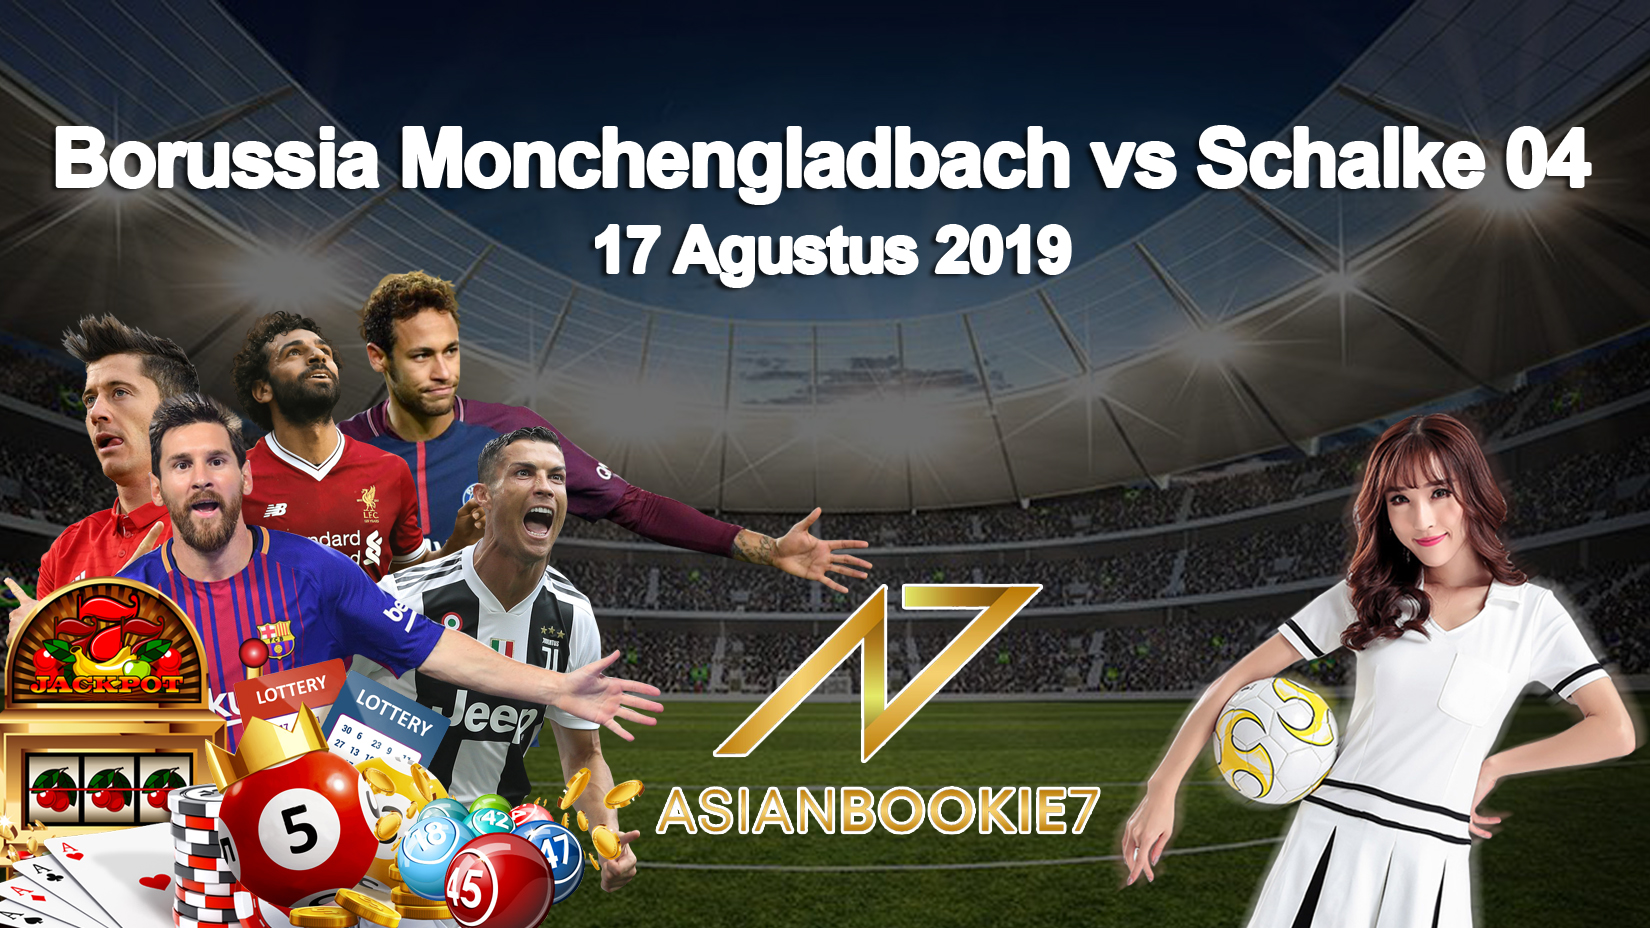 Prediksi Borussia Monchengladbach vs Schalke 04 17 Agustus 2019